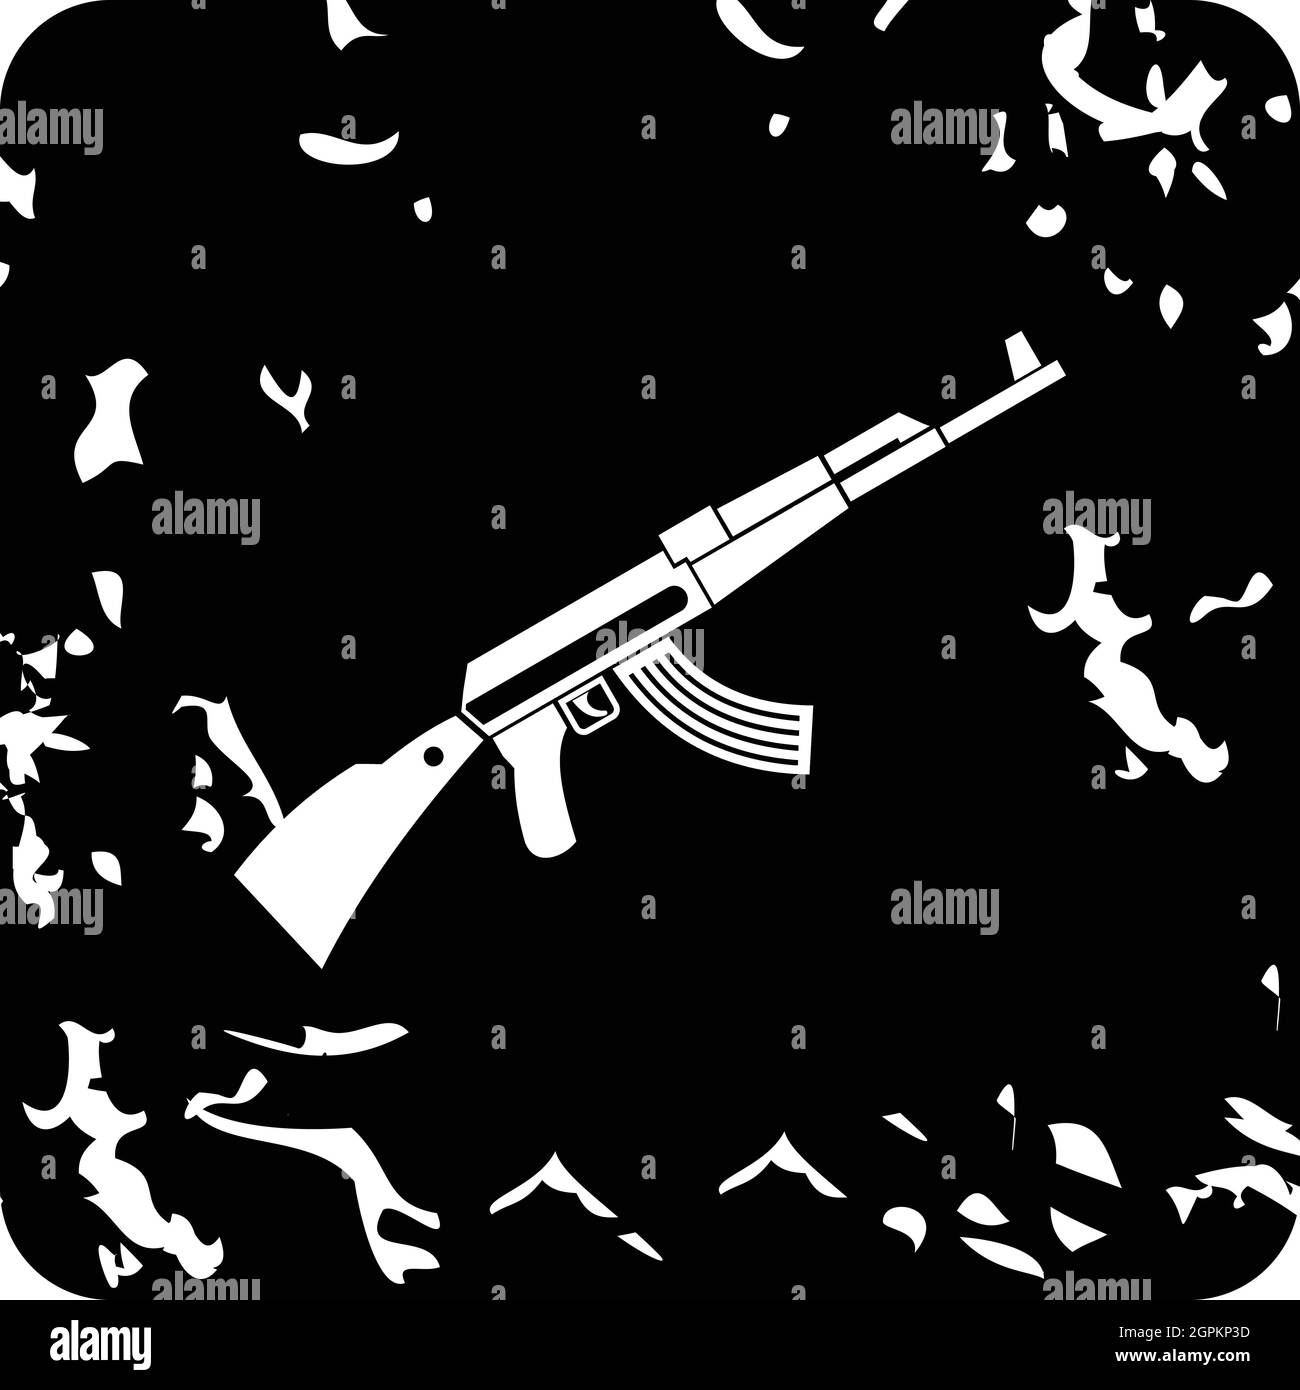 Kalashnikov machine icon, grunge style Stock Vector